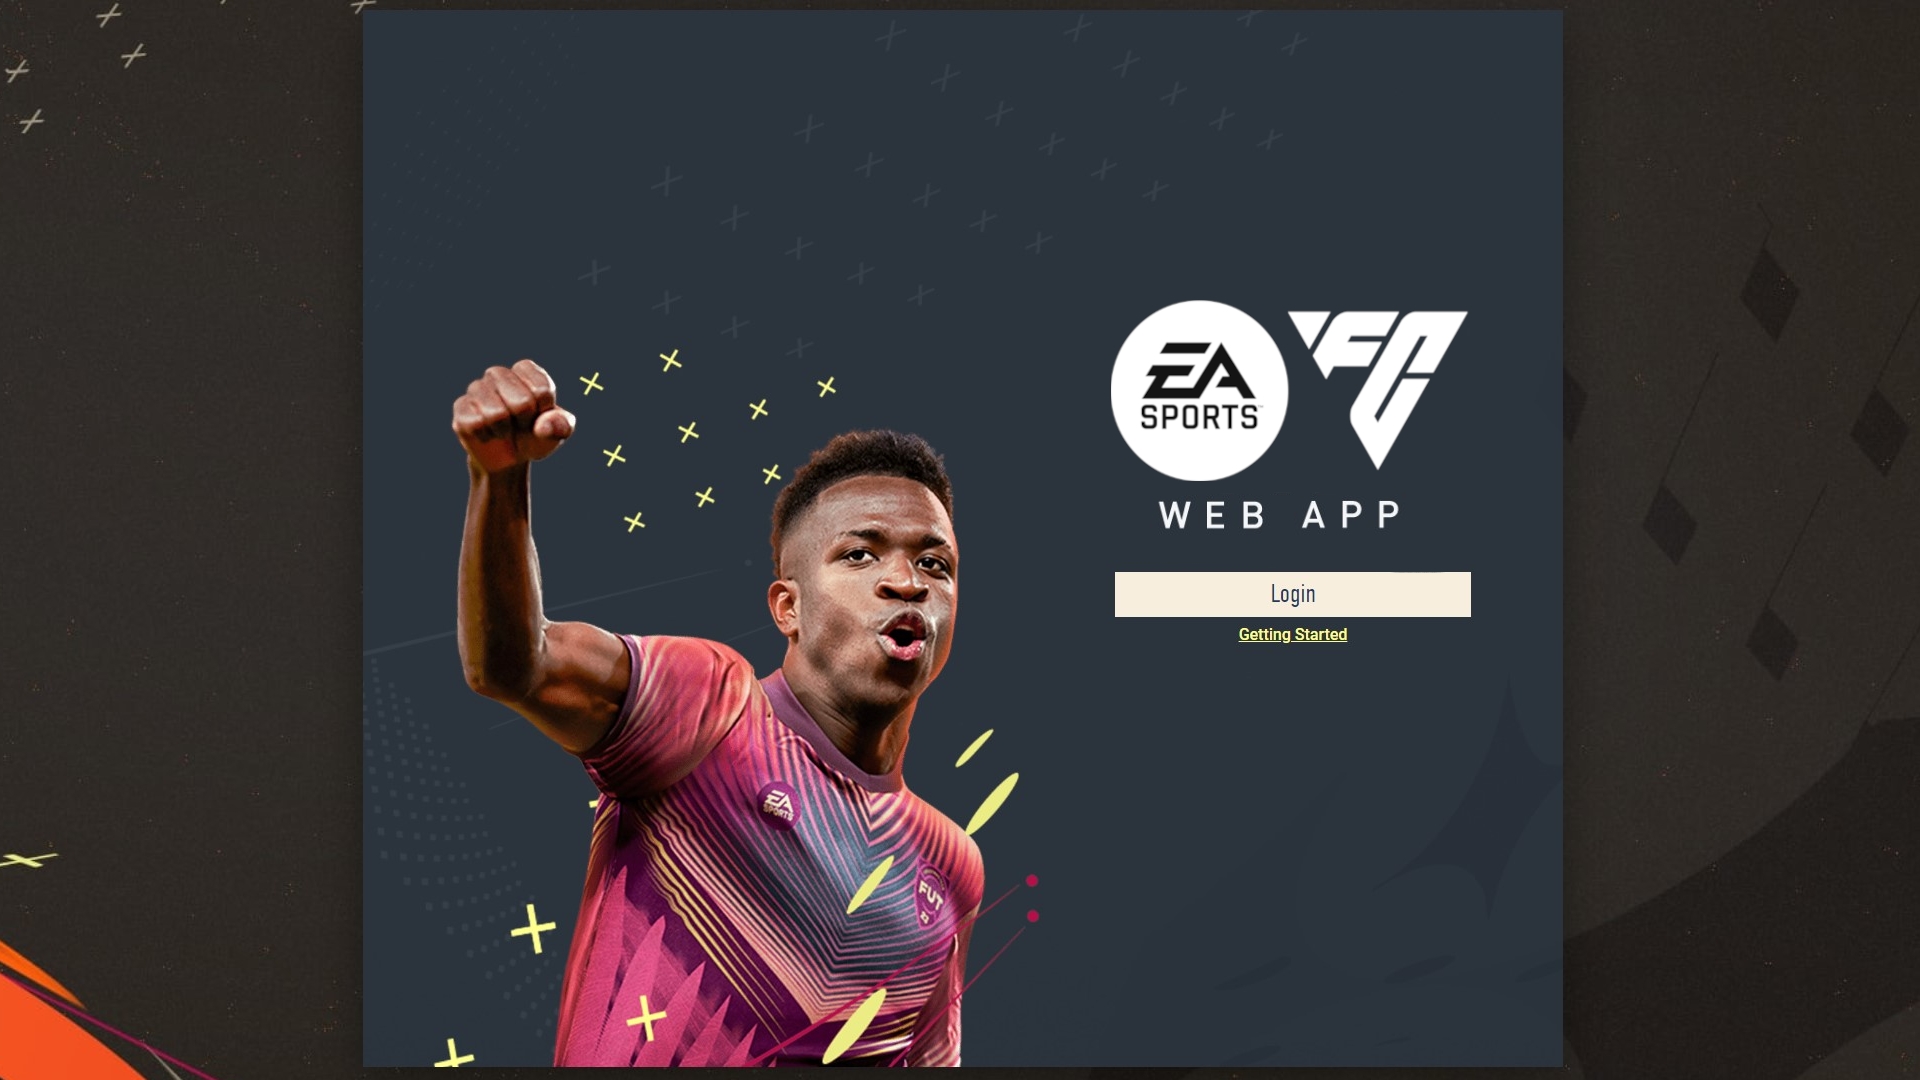 EA FC 24 Web App: Release date, features, Companion App, more